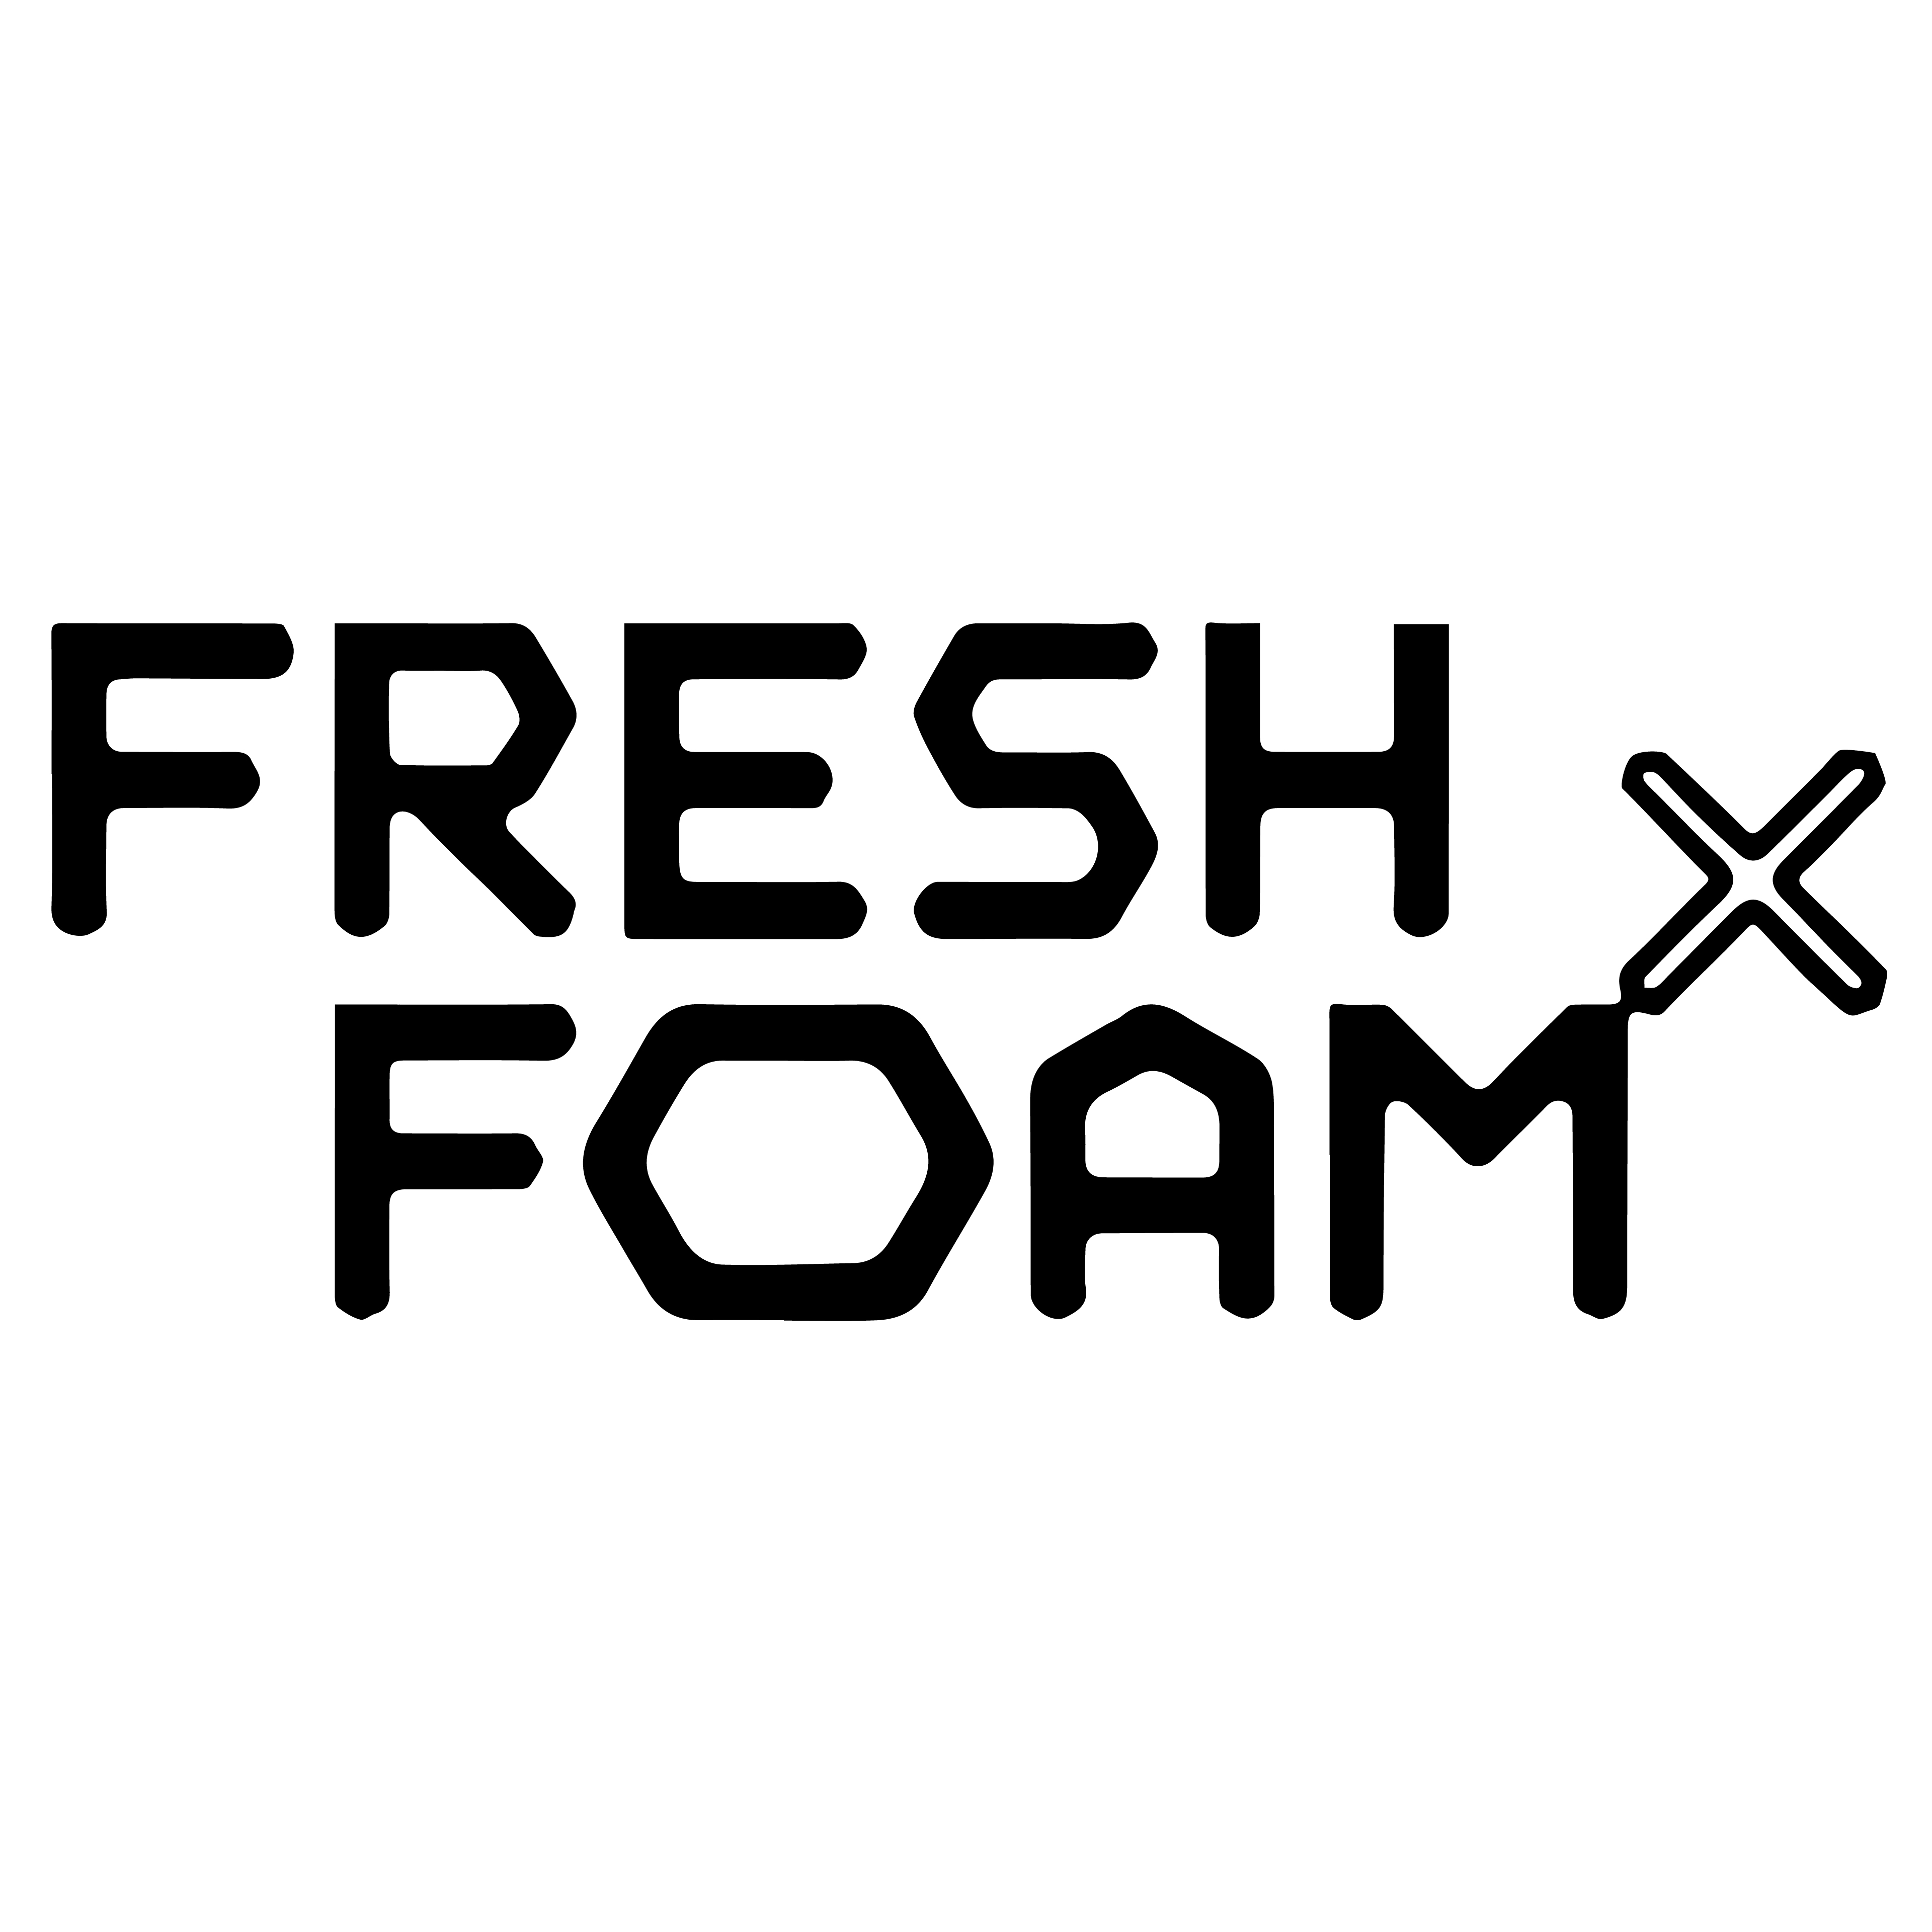 FreshFoamX